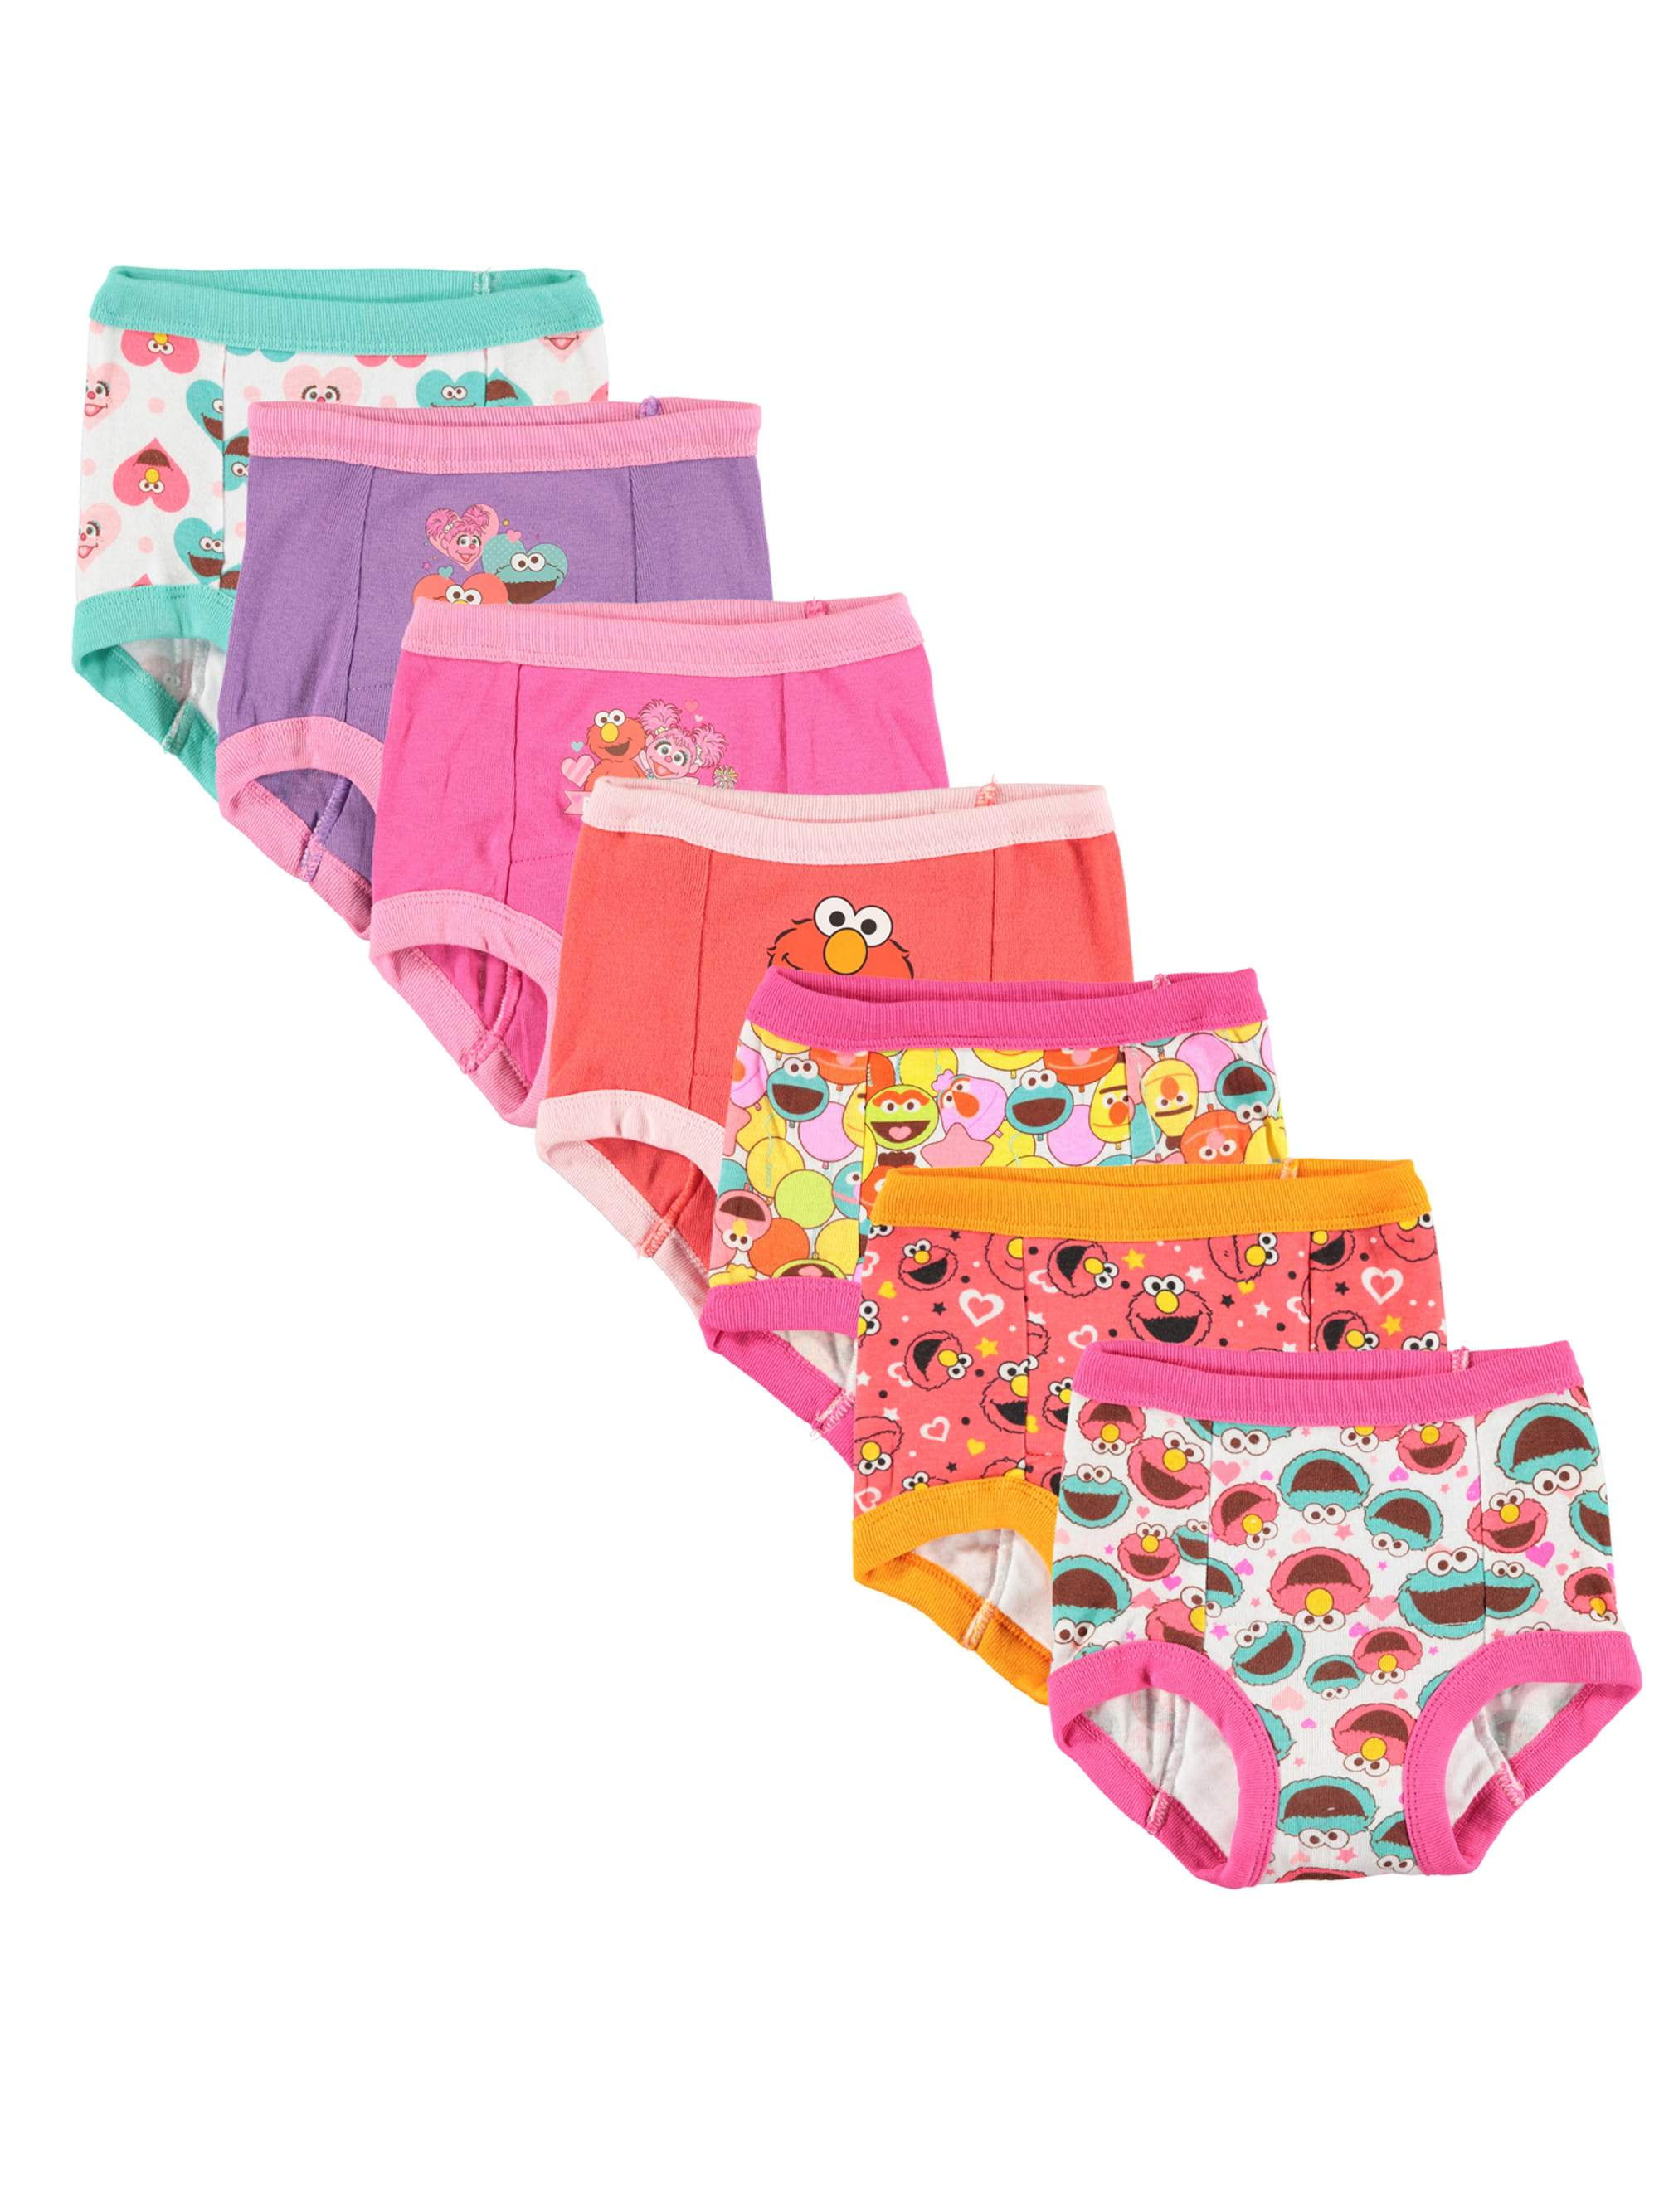 Sesame Street Underwear Underpants Girls 7 Pr Panty 2T3T 4Toddler Assorted New 